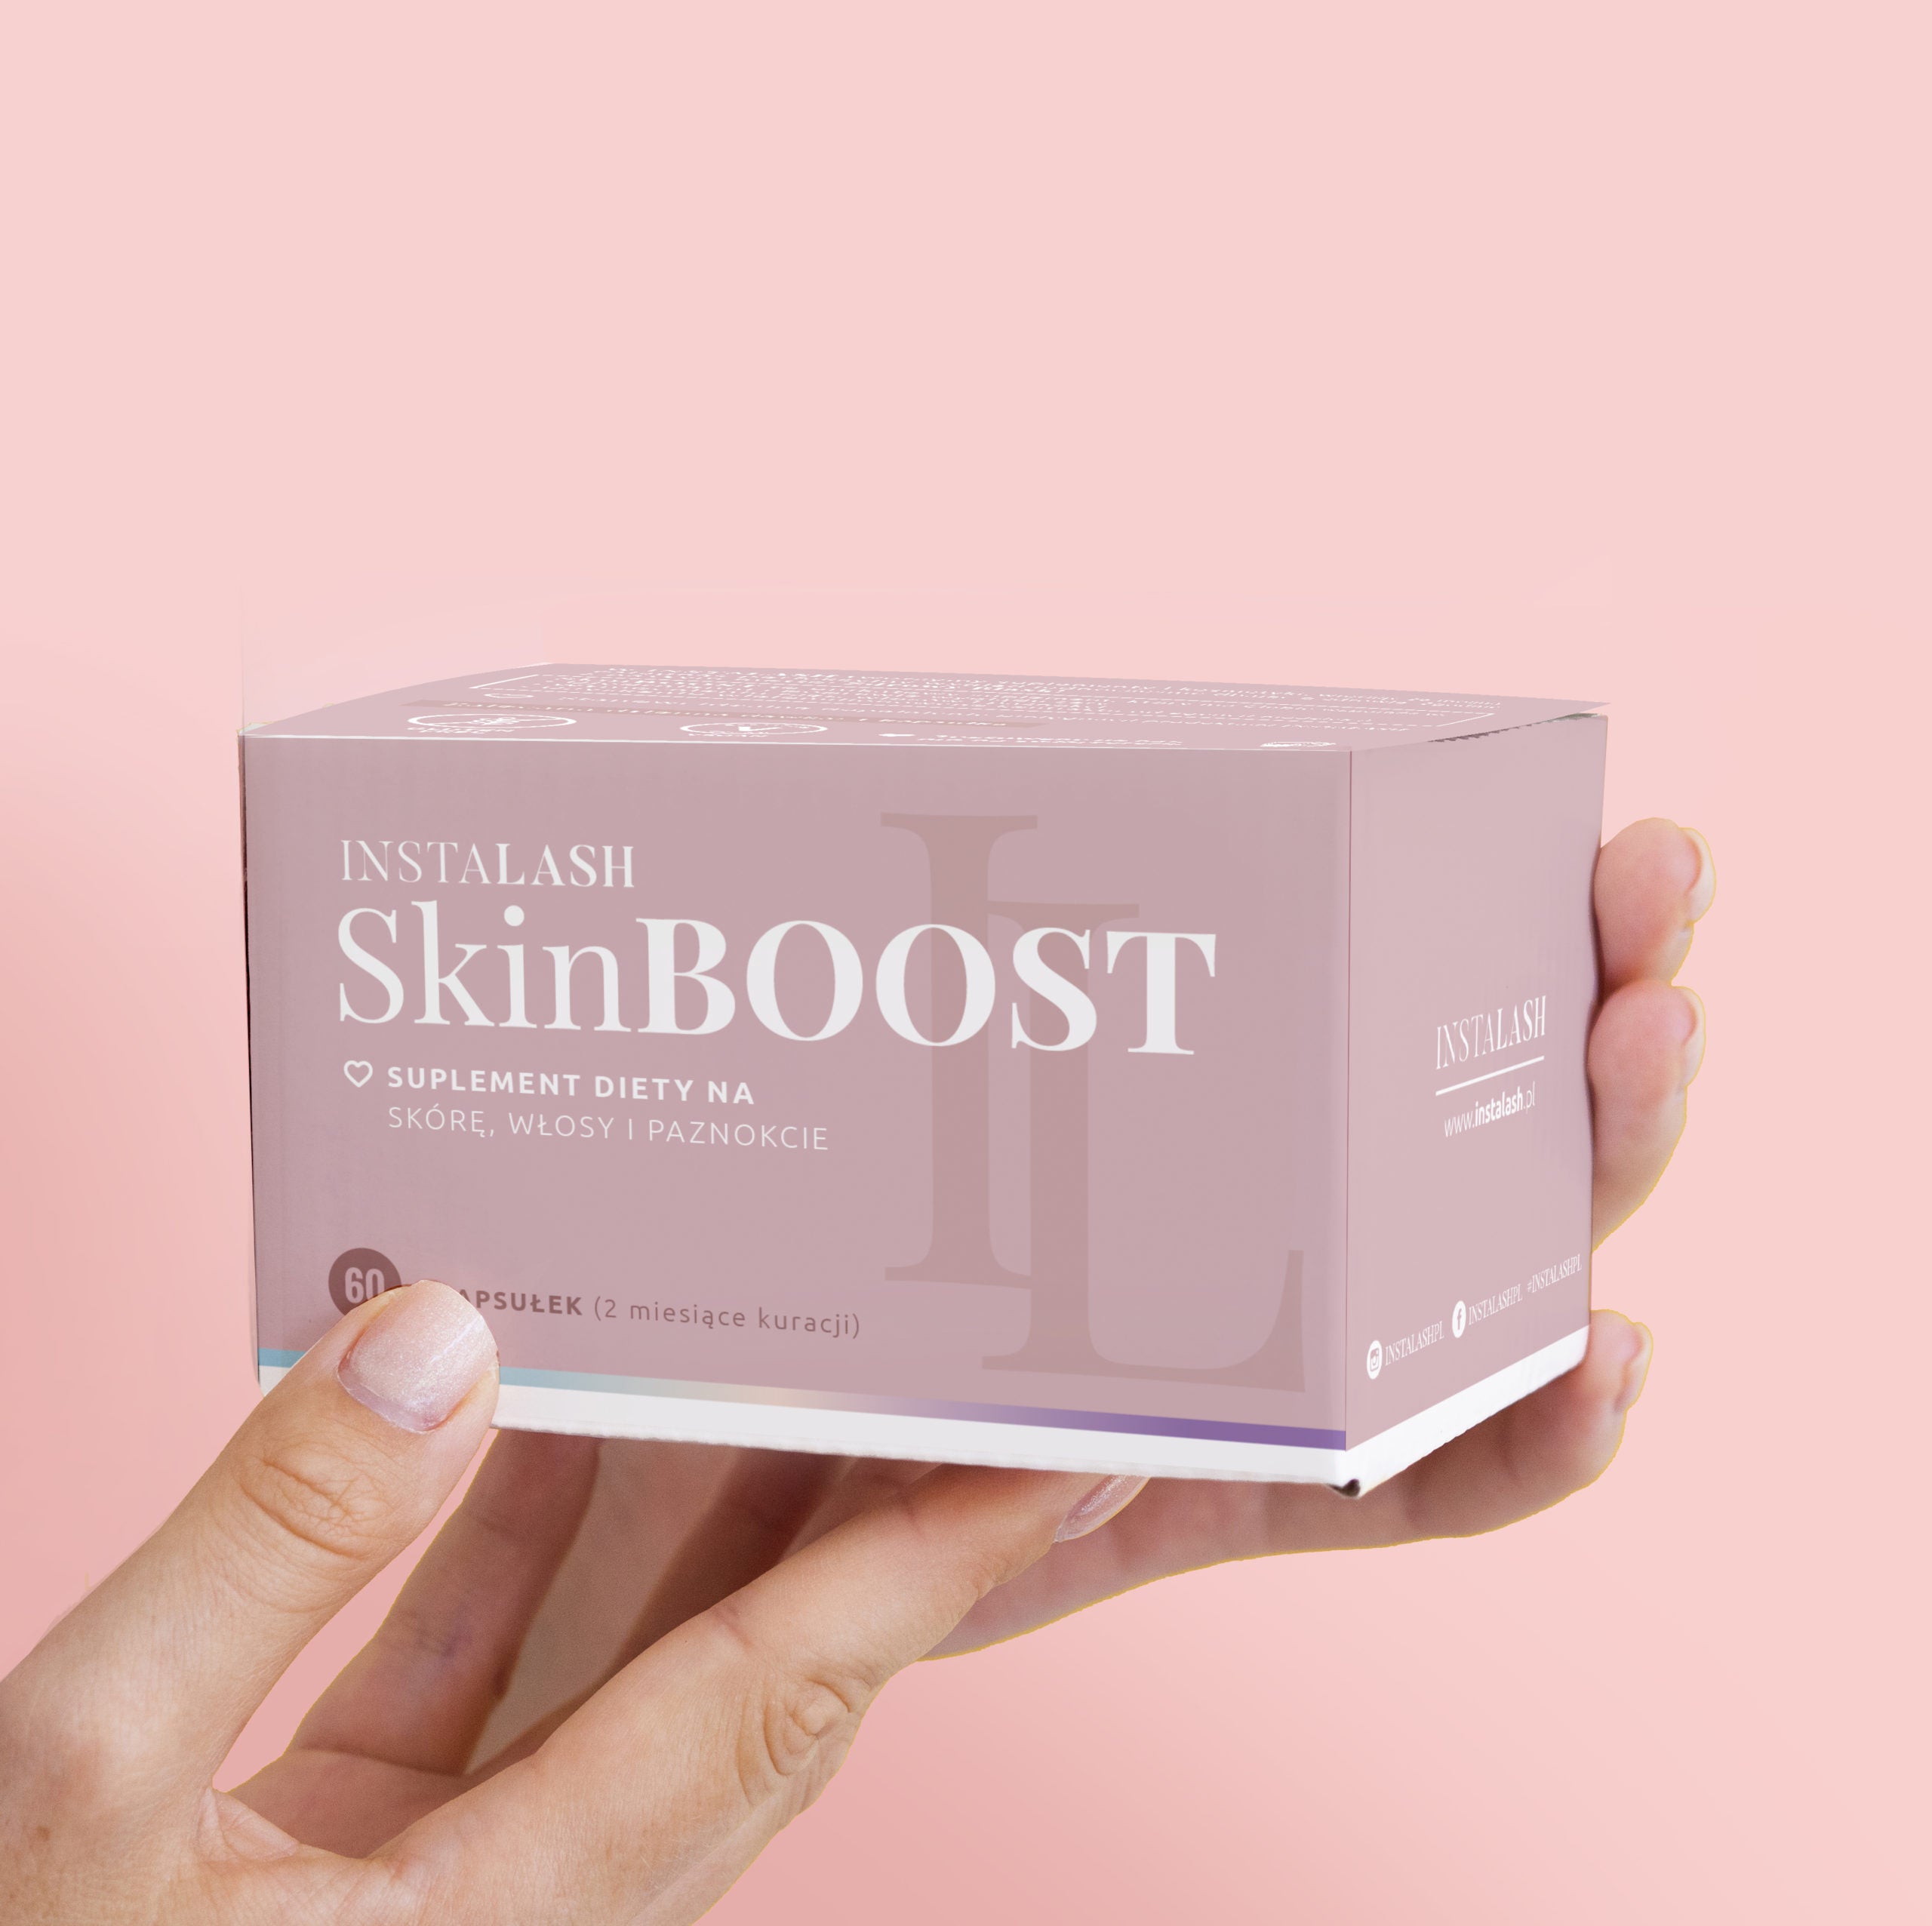 Model holding Instalash SkinBOOST – Dietary Supplement for Skin, Hair, Eyelashes &amp; Nails 60 capsules, packaging